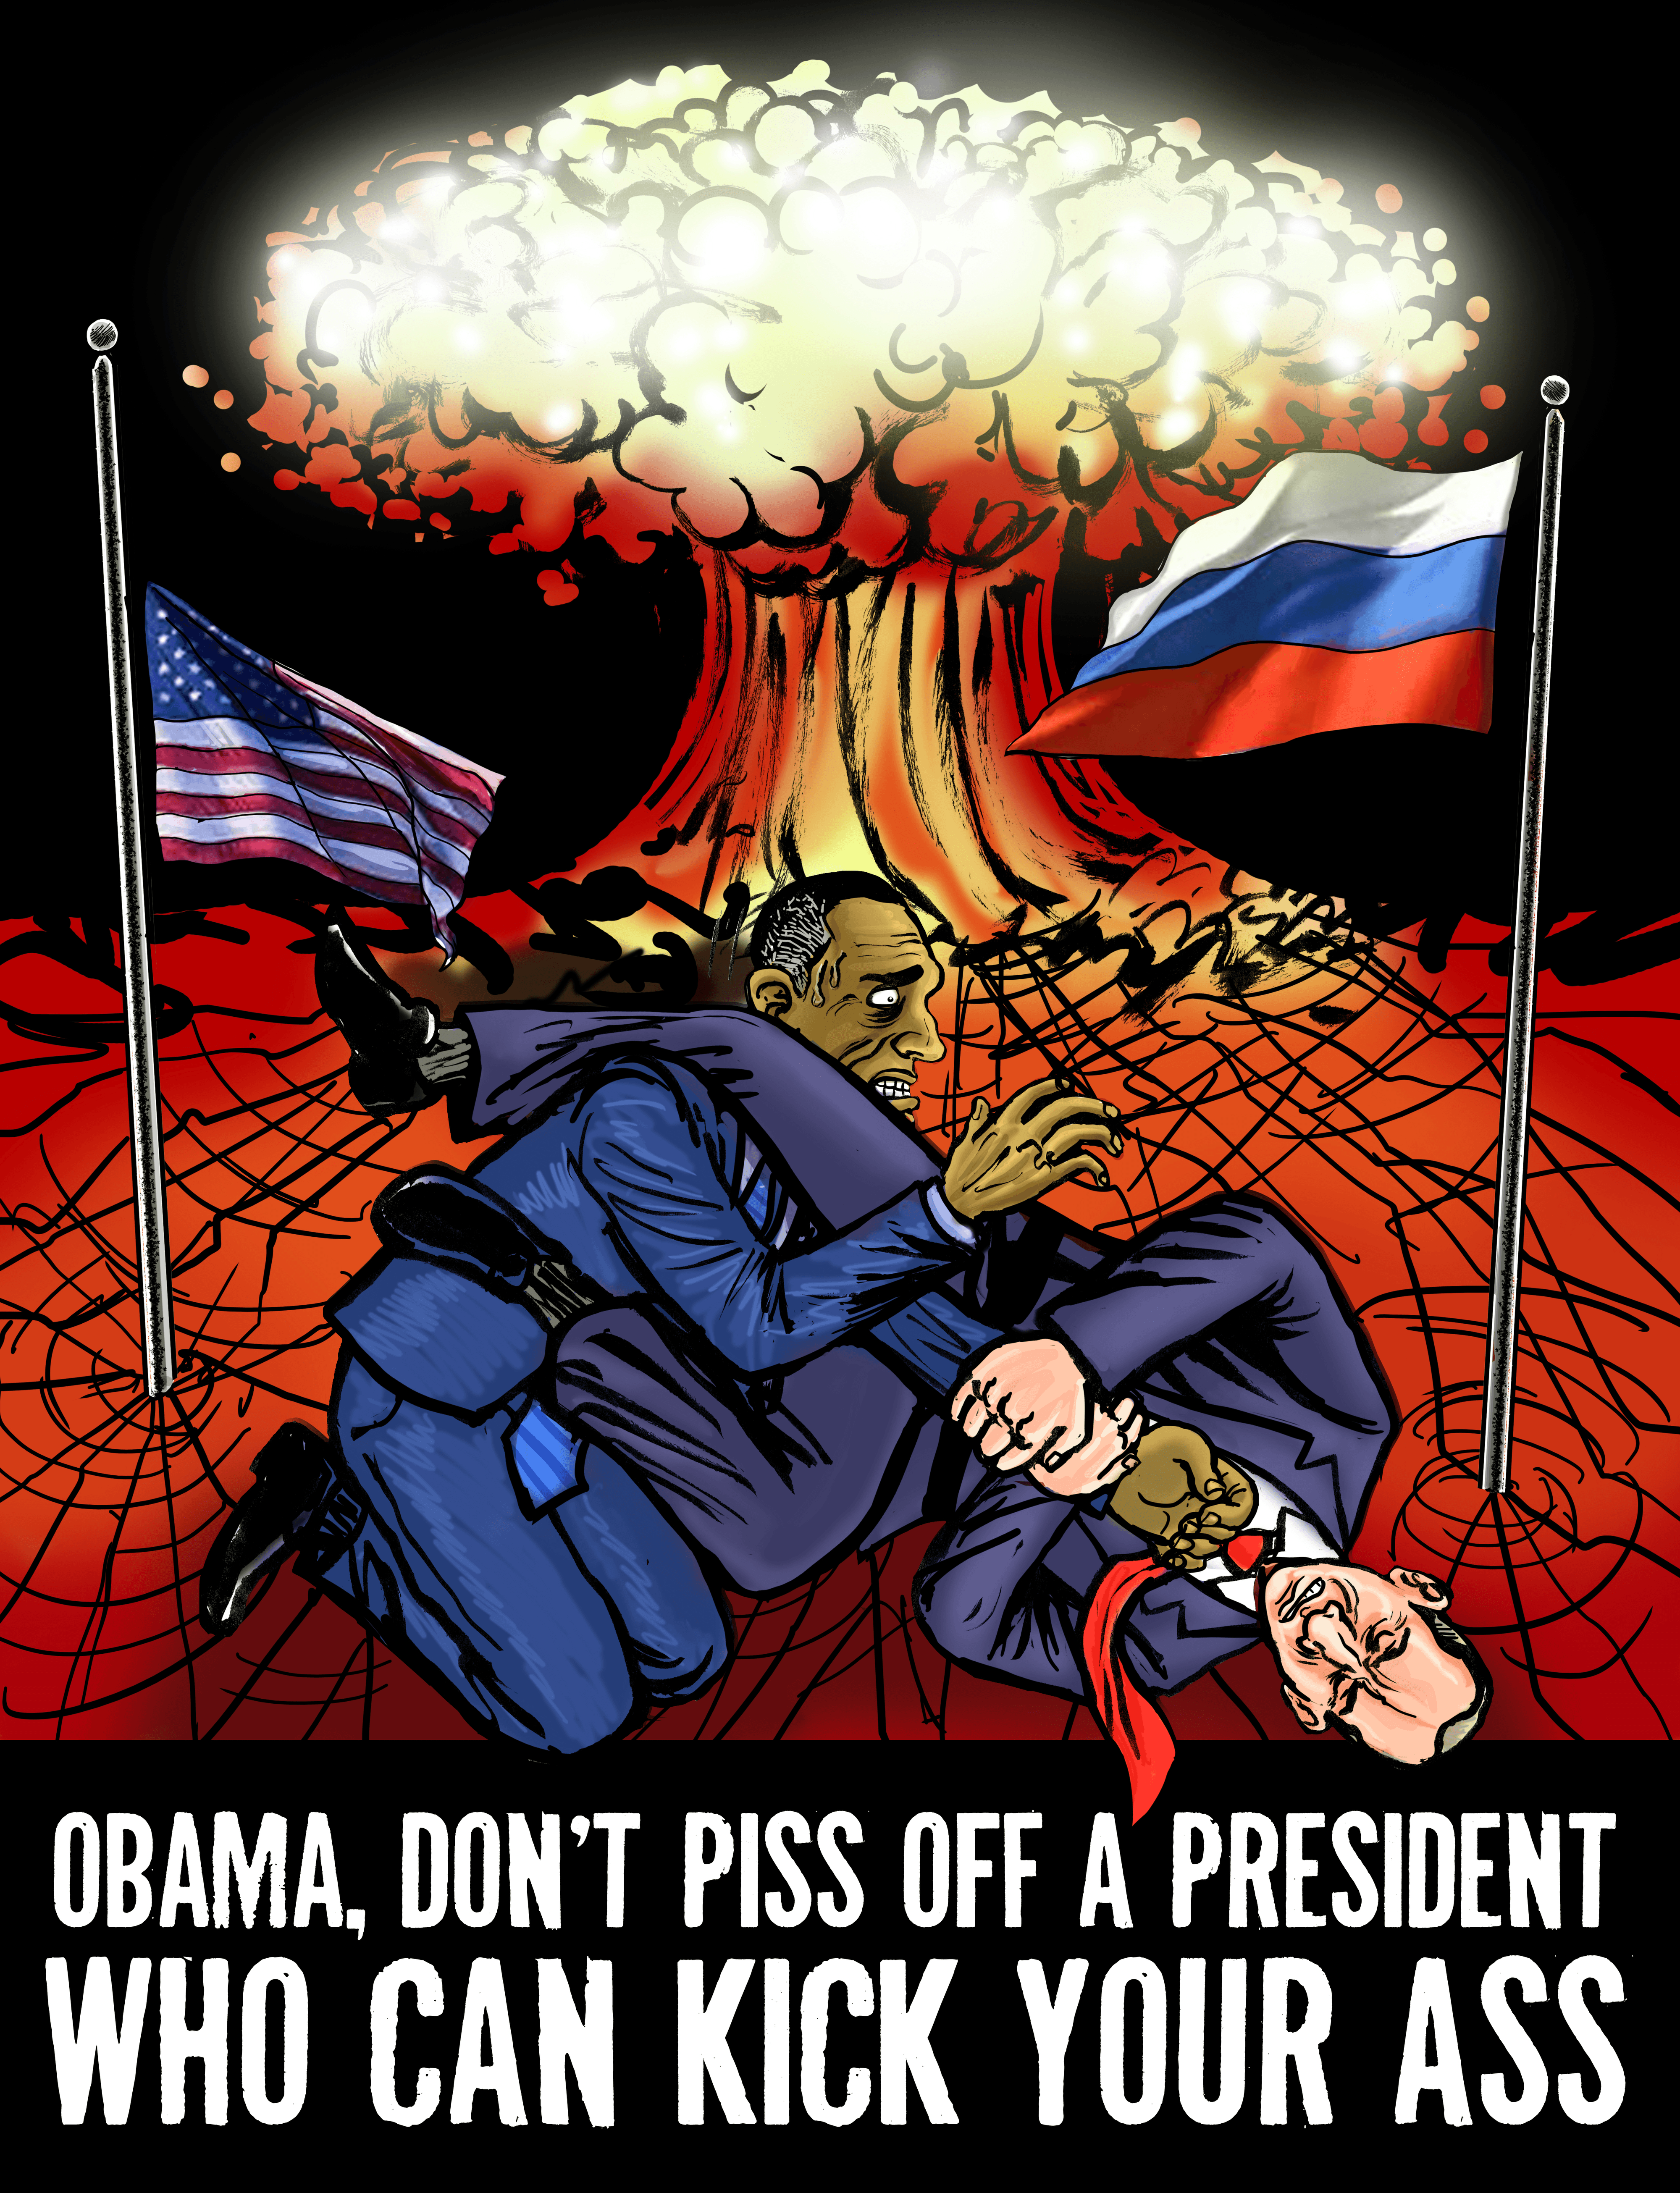 Putin vs. Obama Armbar Submission World War 3 Prophecy Artwork 2013